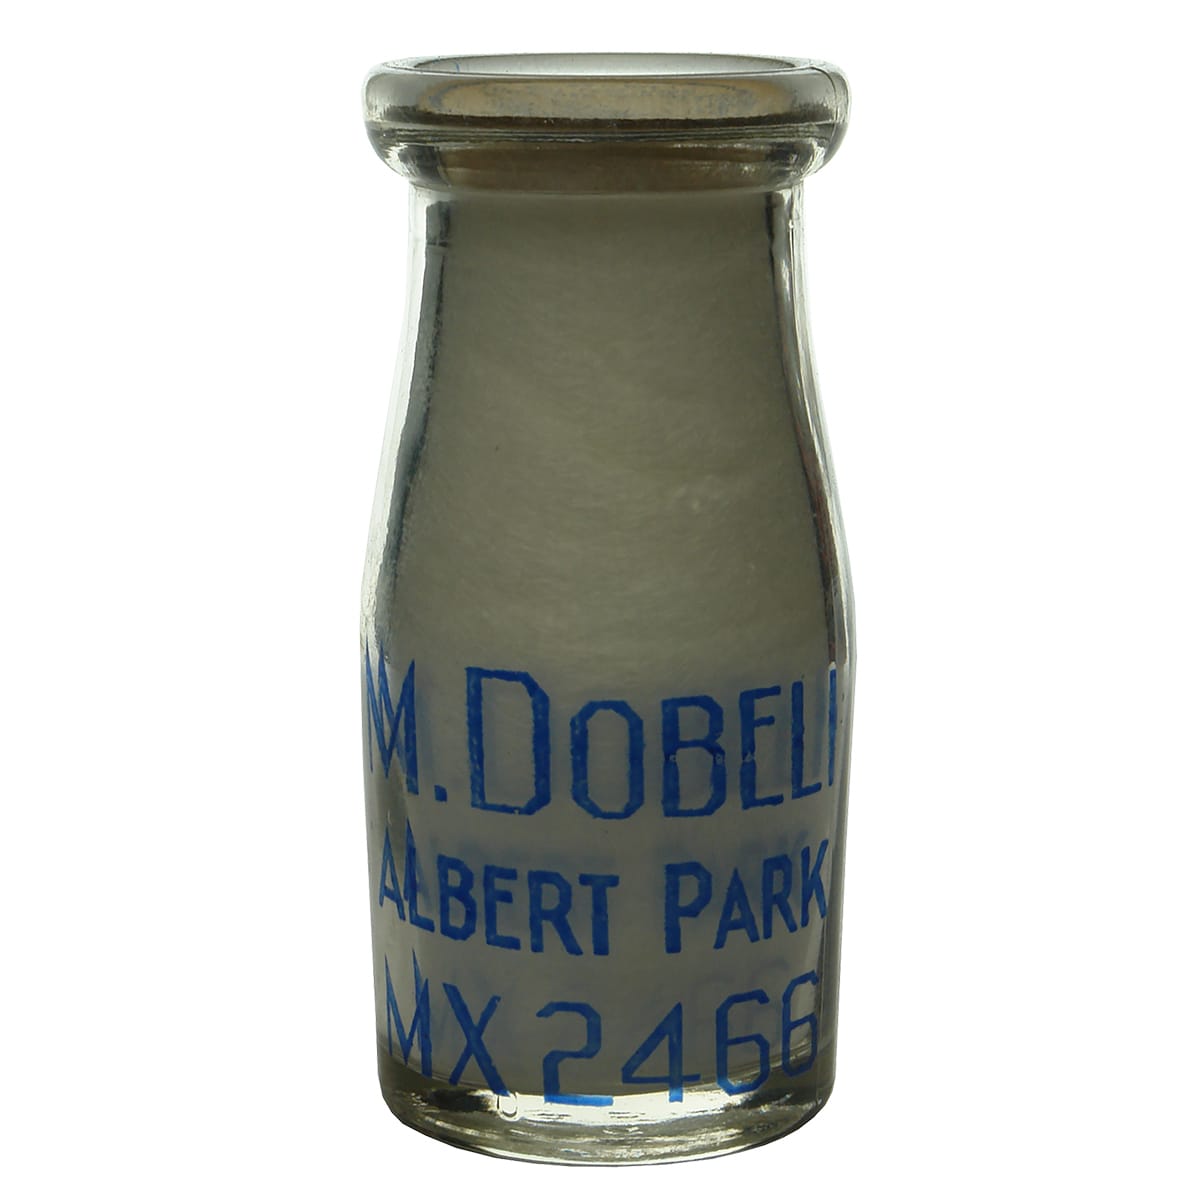 Milk. M. Dobeli, Albert Park. Wad lip. Ceramic label. 1/4 Pint.